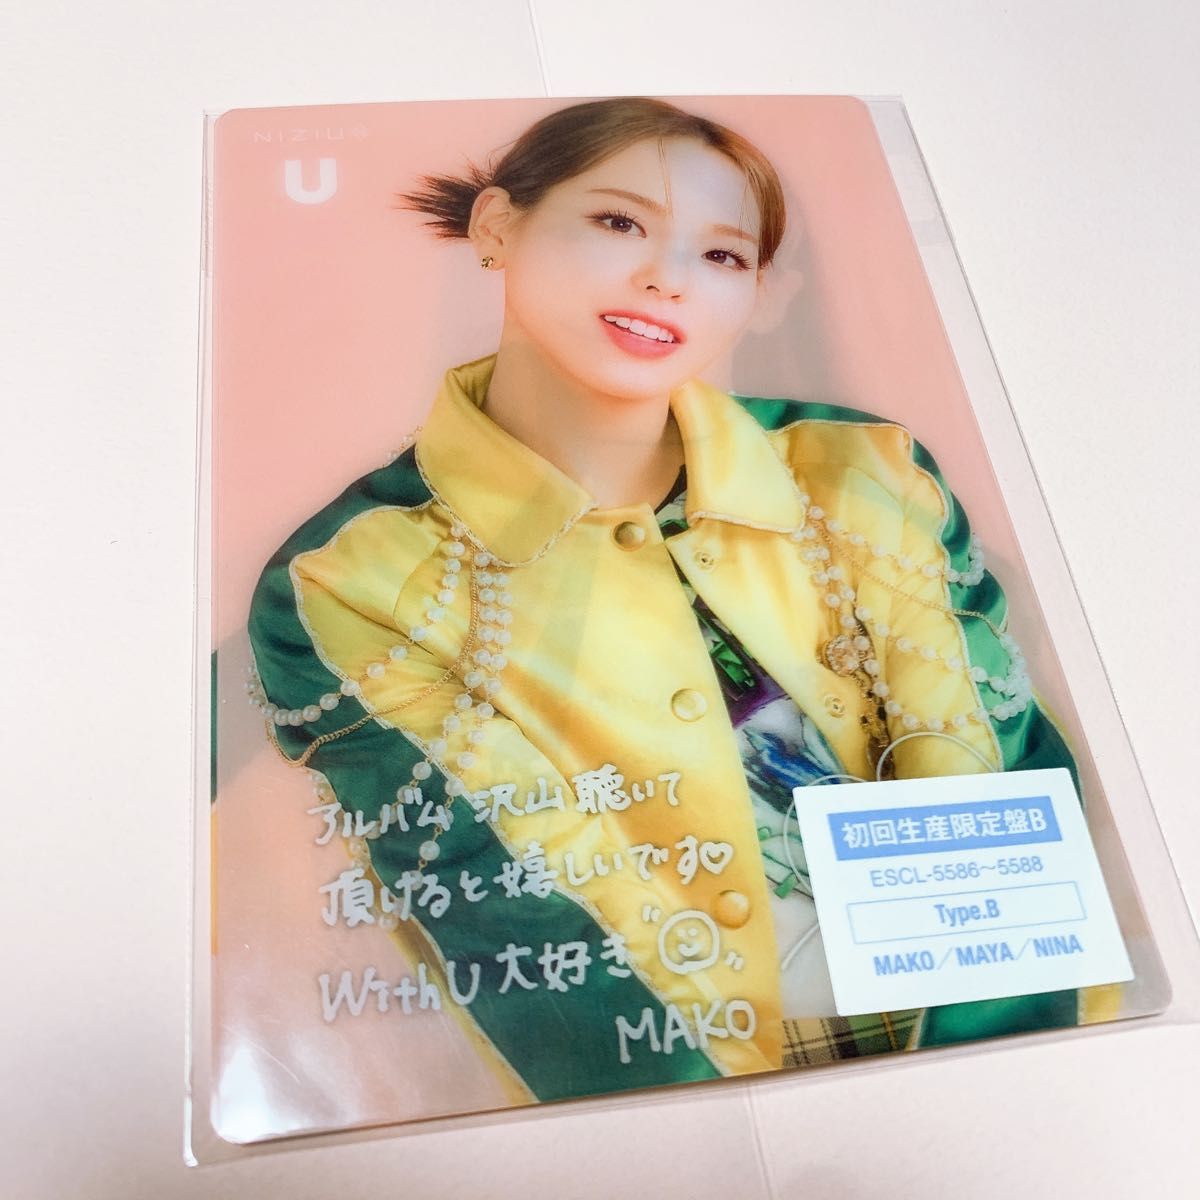 NiziU Album U Loppi HMV 限定特典 初回生産限定盤 A B 通常盤 印字サイン メッセージ クリアカード